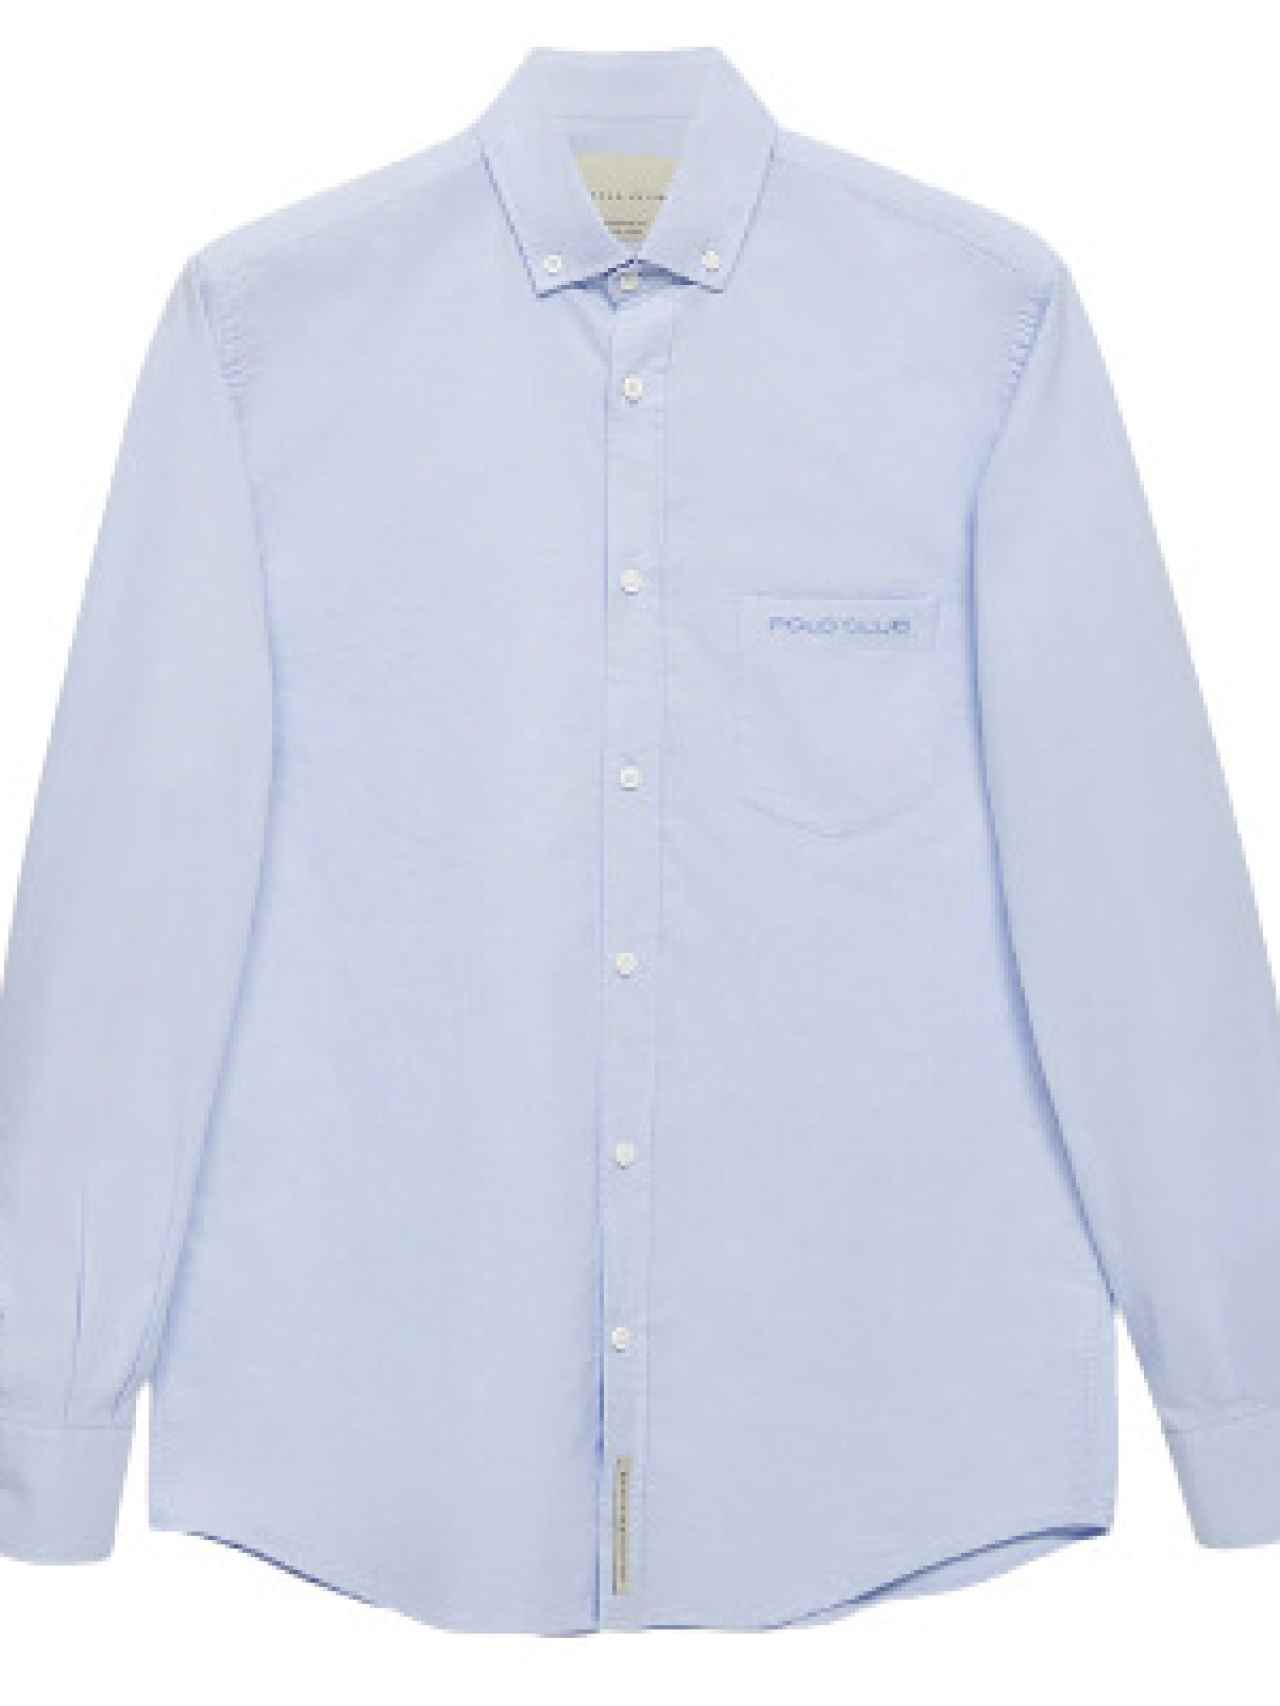 Camisa oxford azul con bolsillo y logo bordado. (Precio: 120 euros).